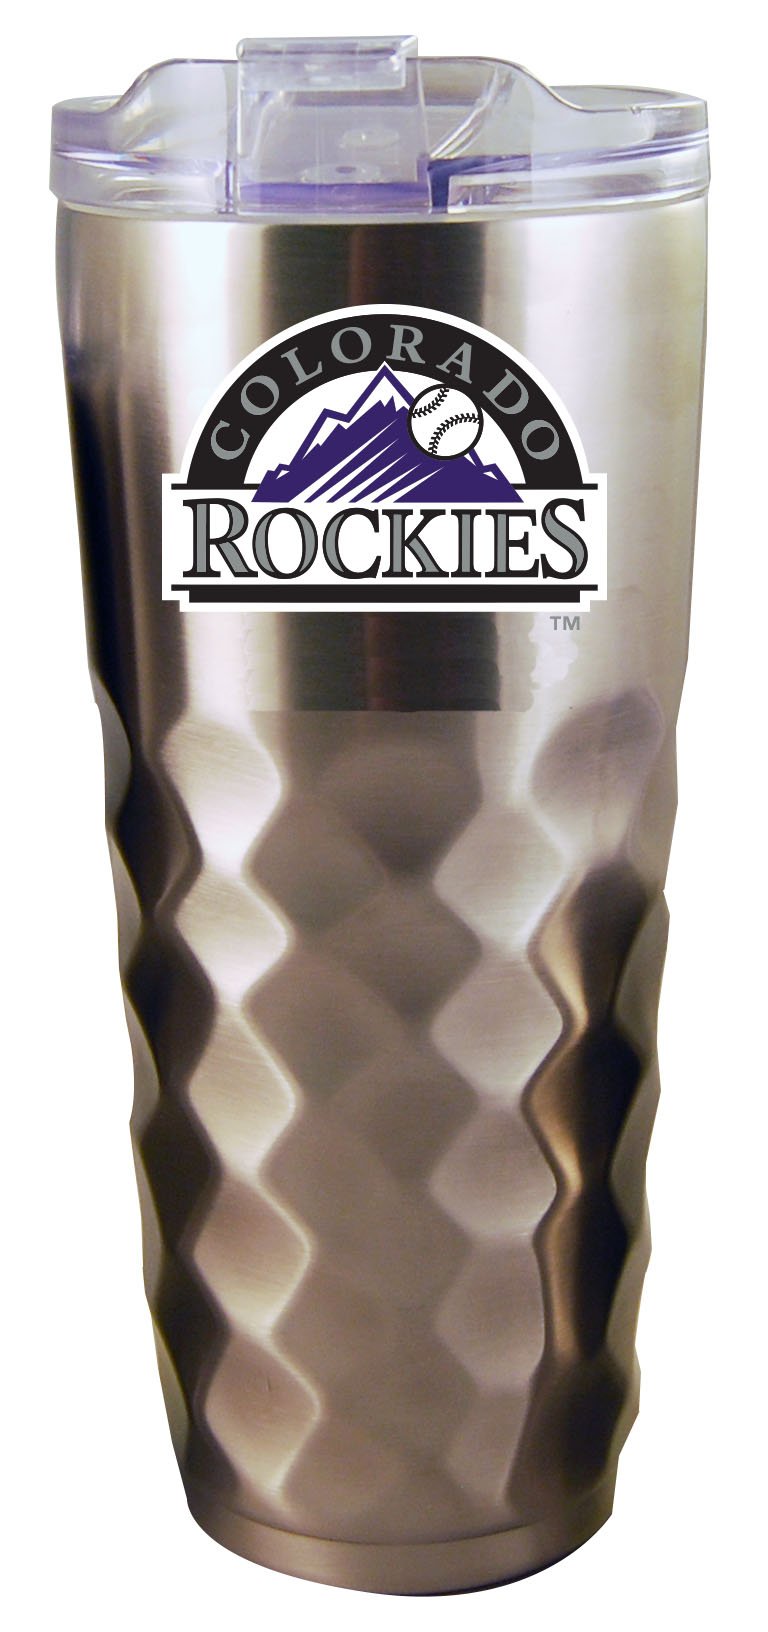 32OZ SS DIAMD TMBLR ROCKIES
Colorado Rockies, CRK, CurrentProduct, Drinkware_category_All, MLB
The Memory Company